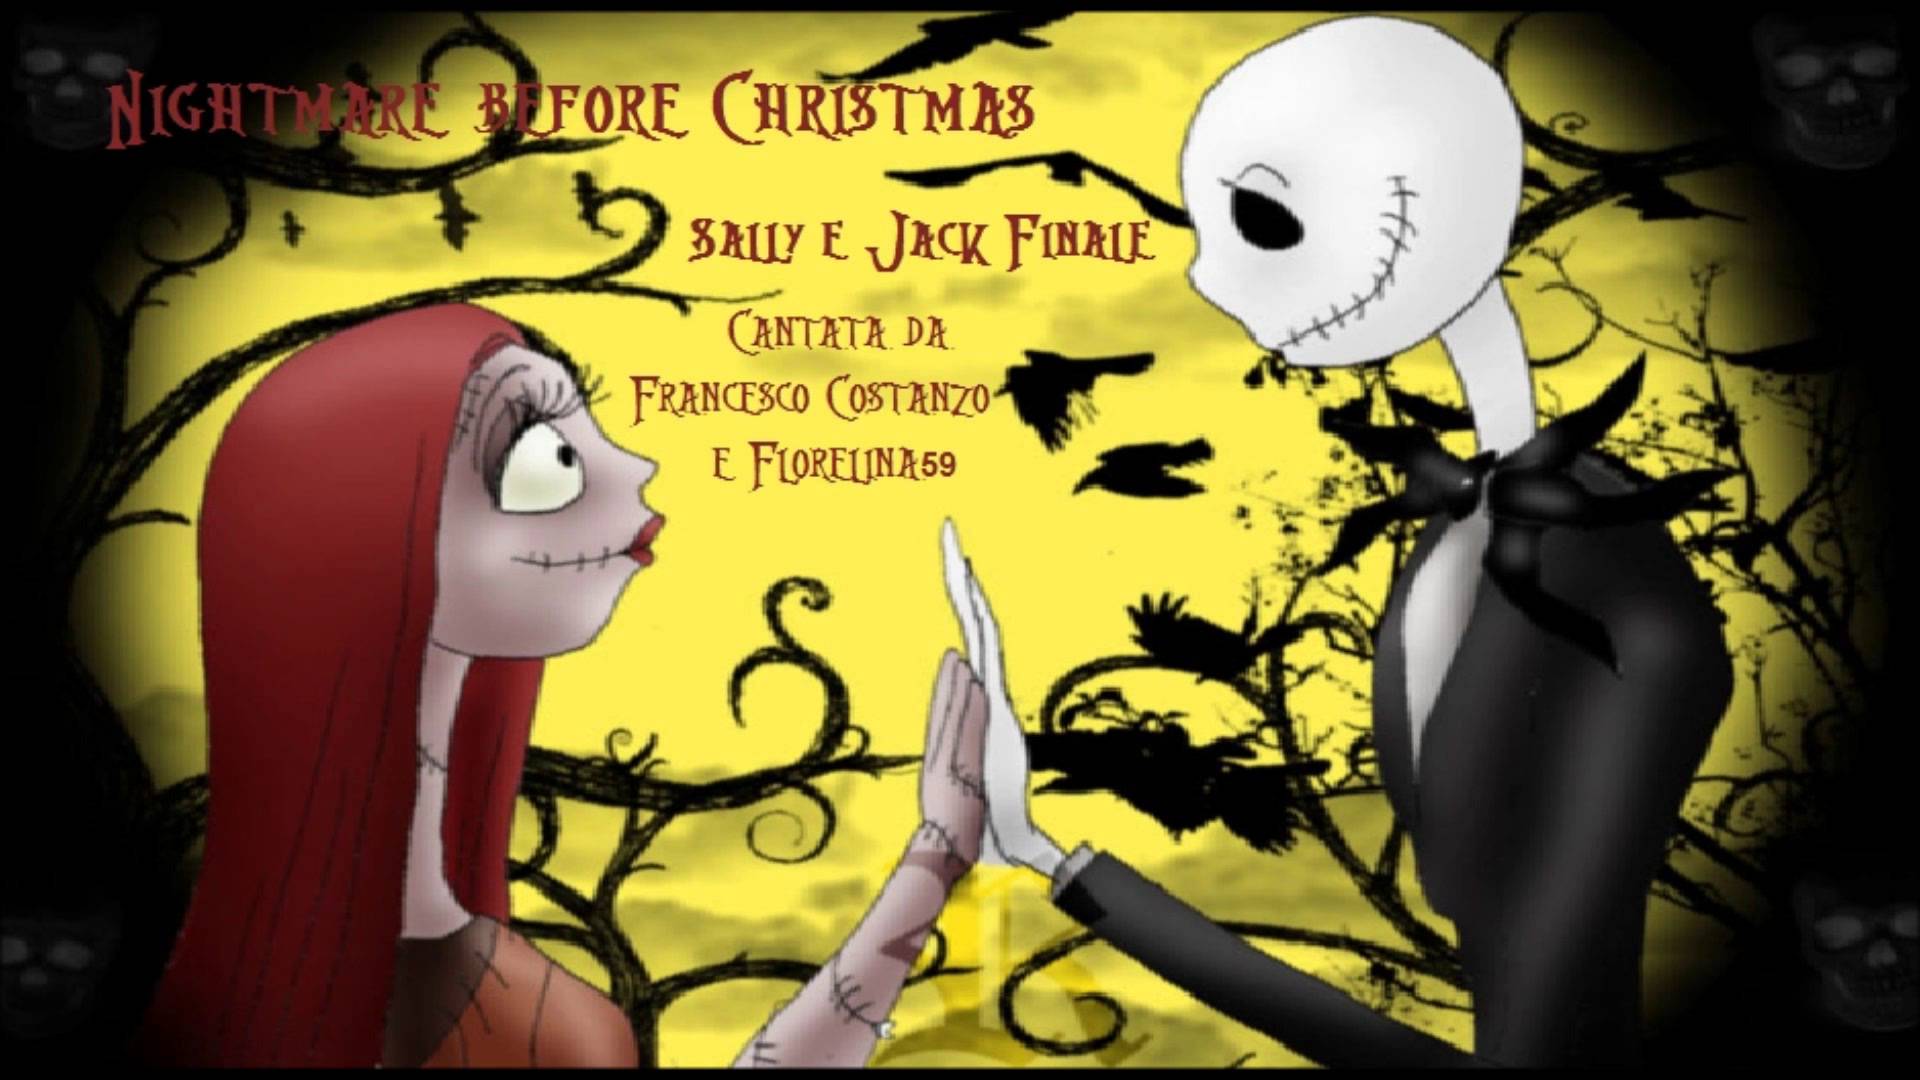 Nightmare before Christmas) Sally e Jack finale (Duetto con